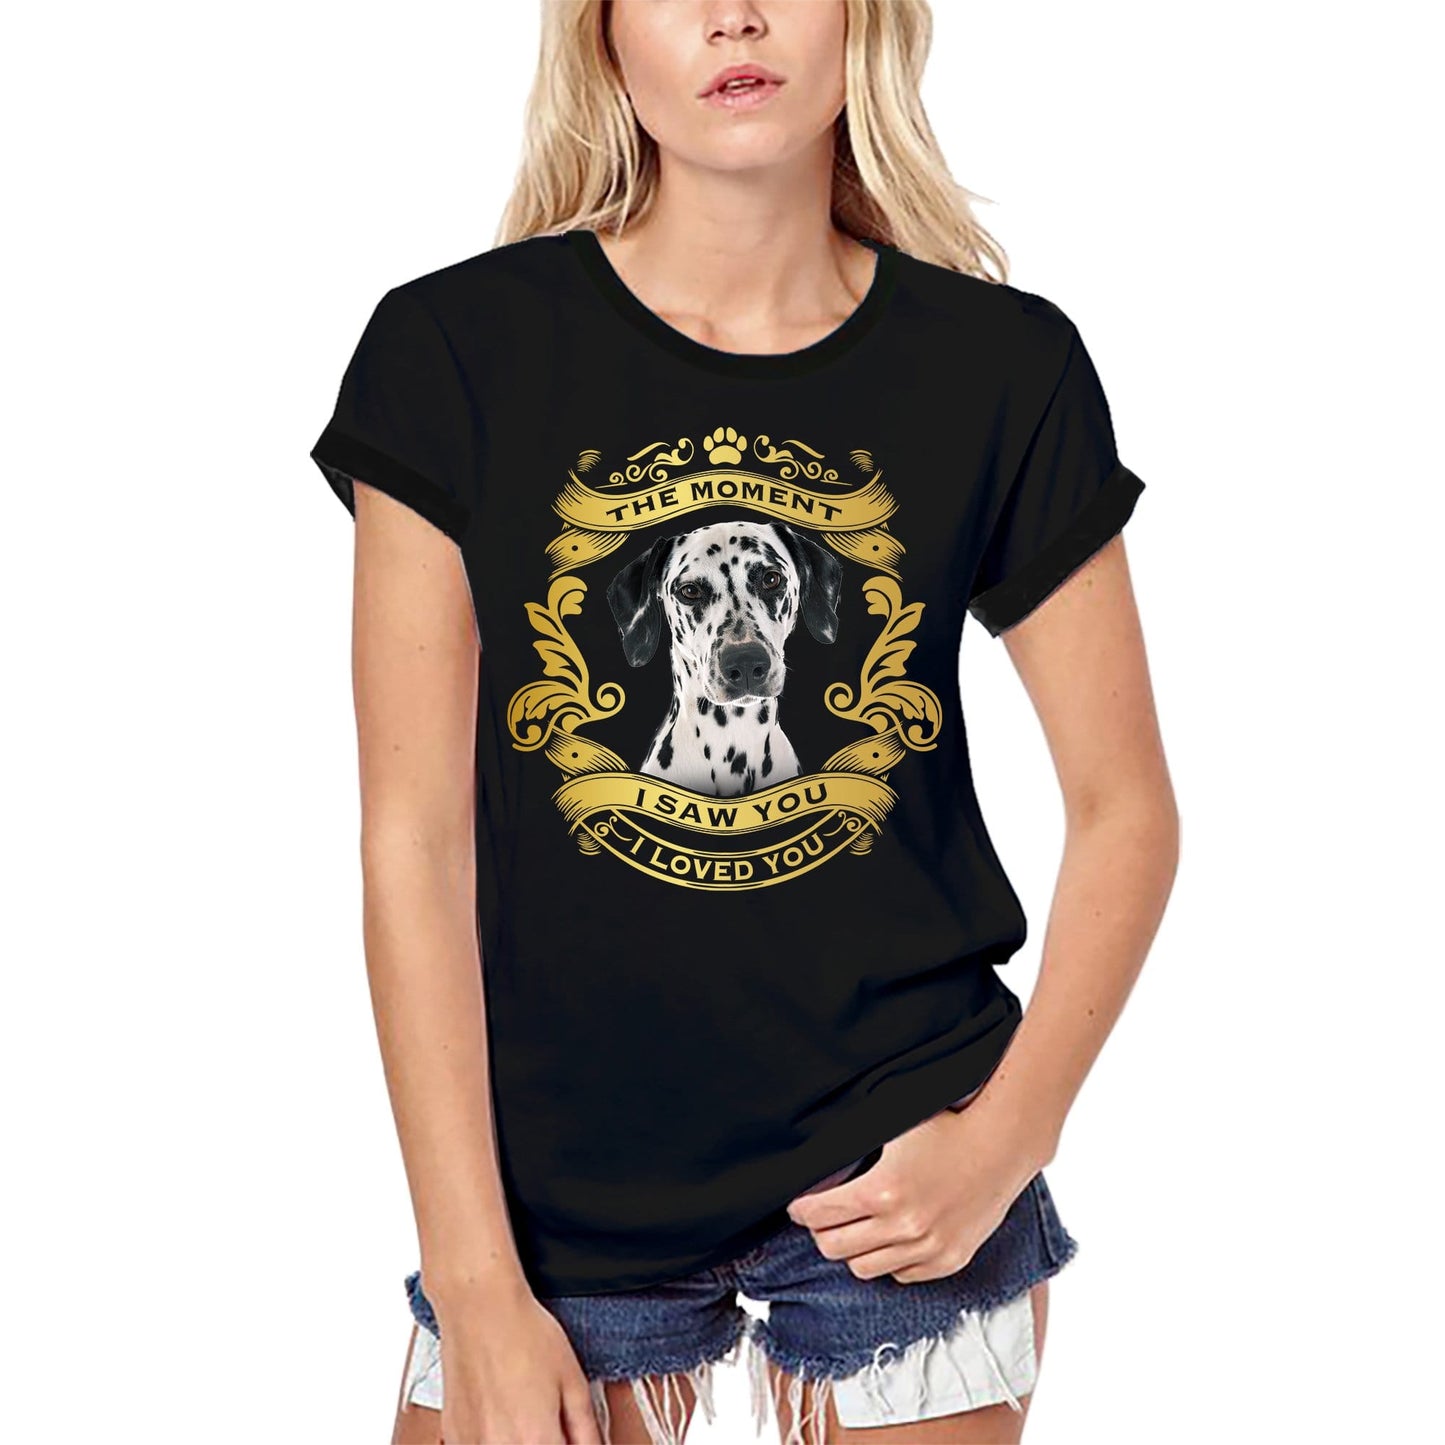 ULTRABASIC Women's Organic T-Shirt Dalmatian Dog - Moment I Saw You I Loved You Puppy Tee Shirt for Ladies